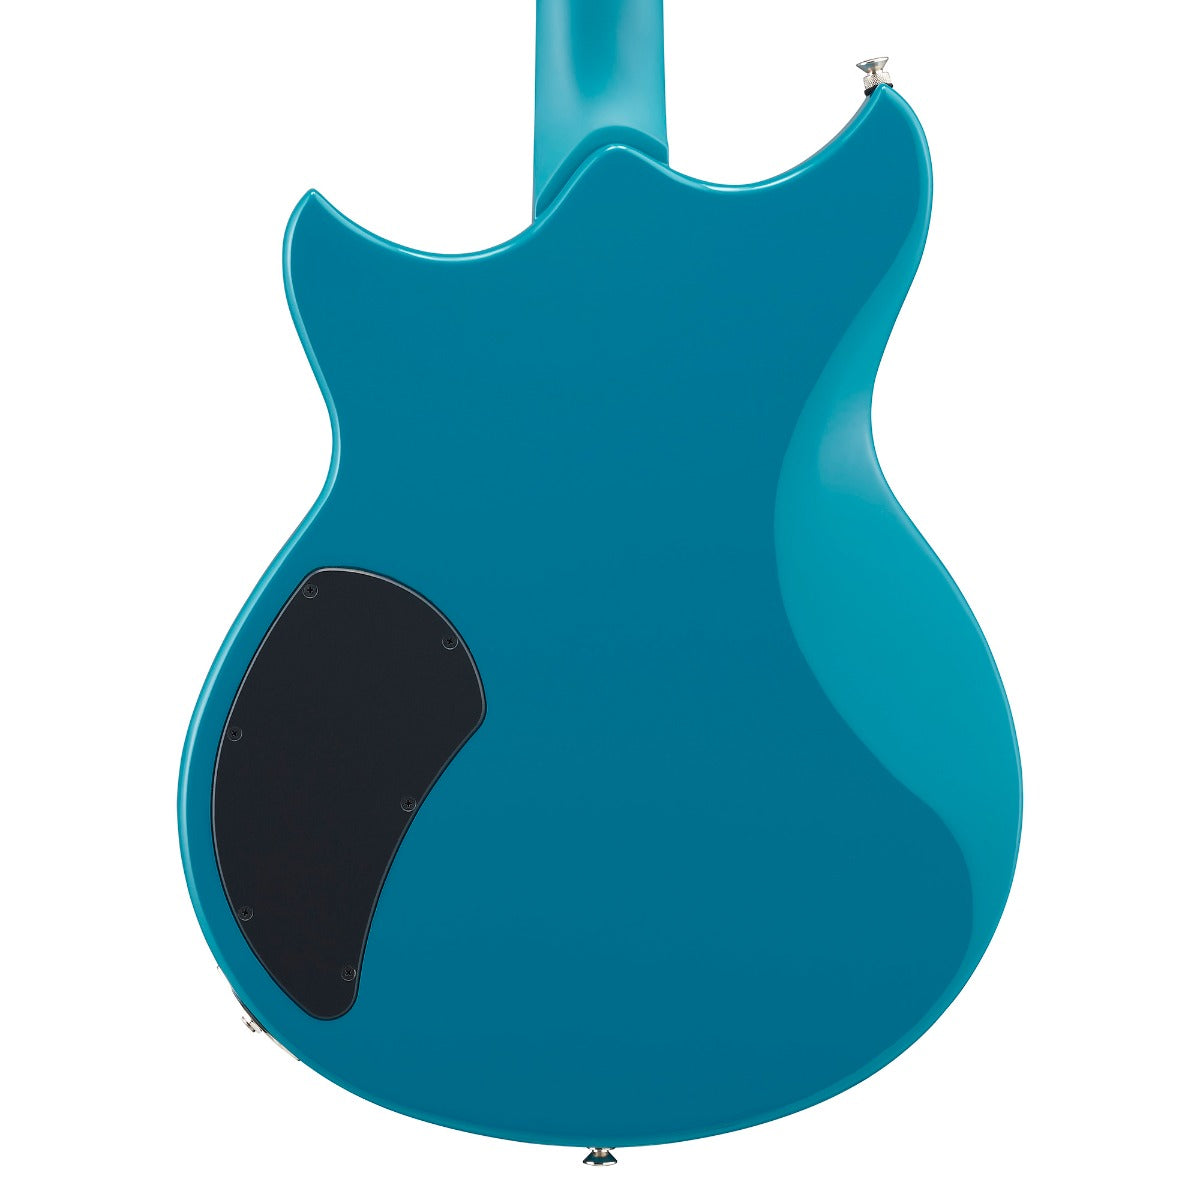 Yamaha RSE20 Revstar Element Electric Guitar - Swift Blue, View 2